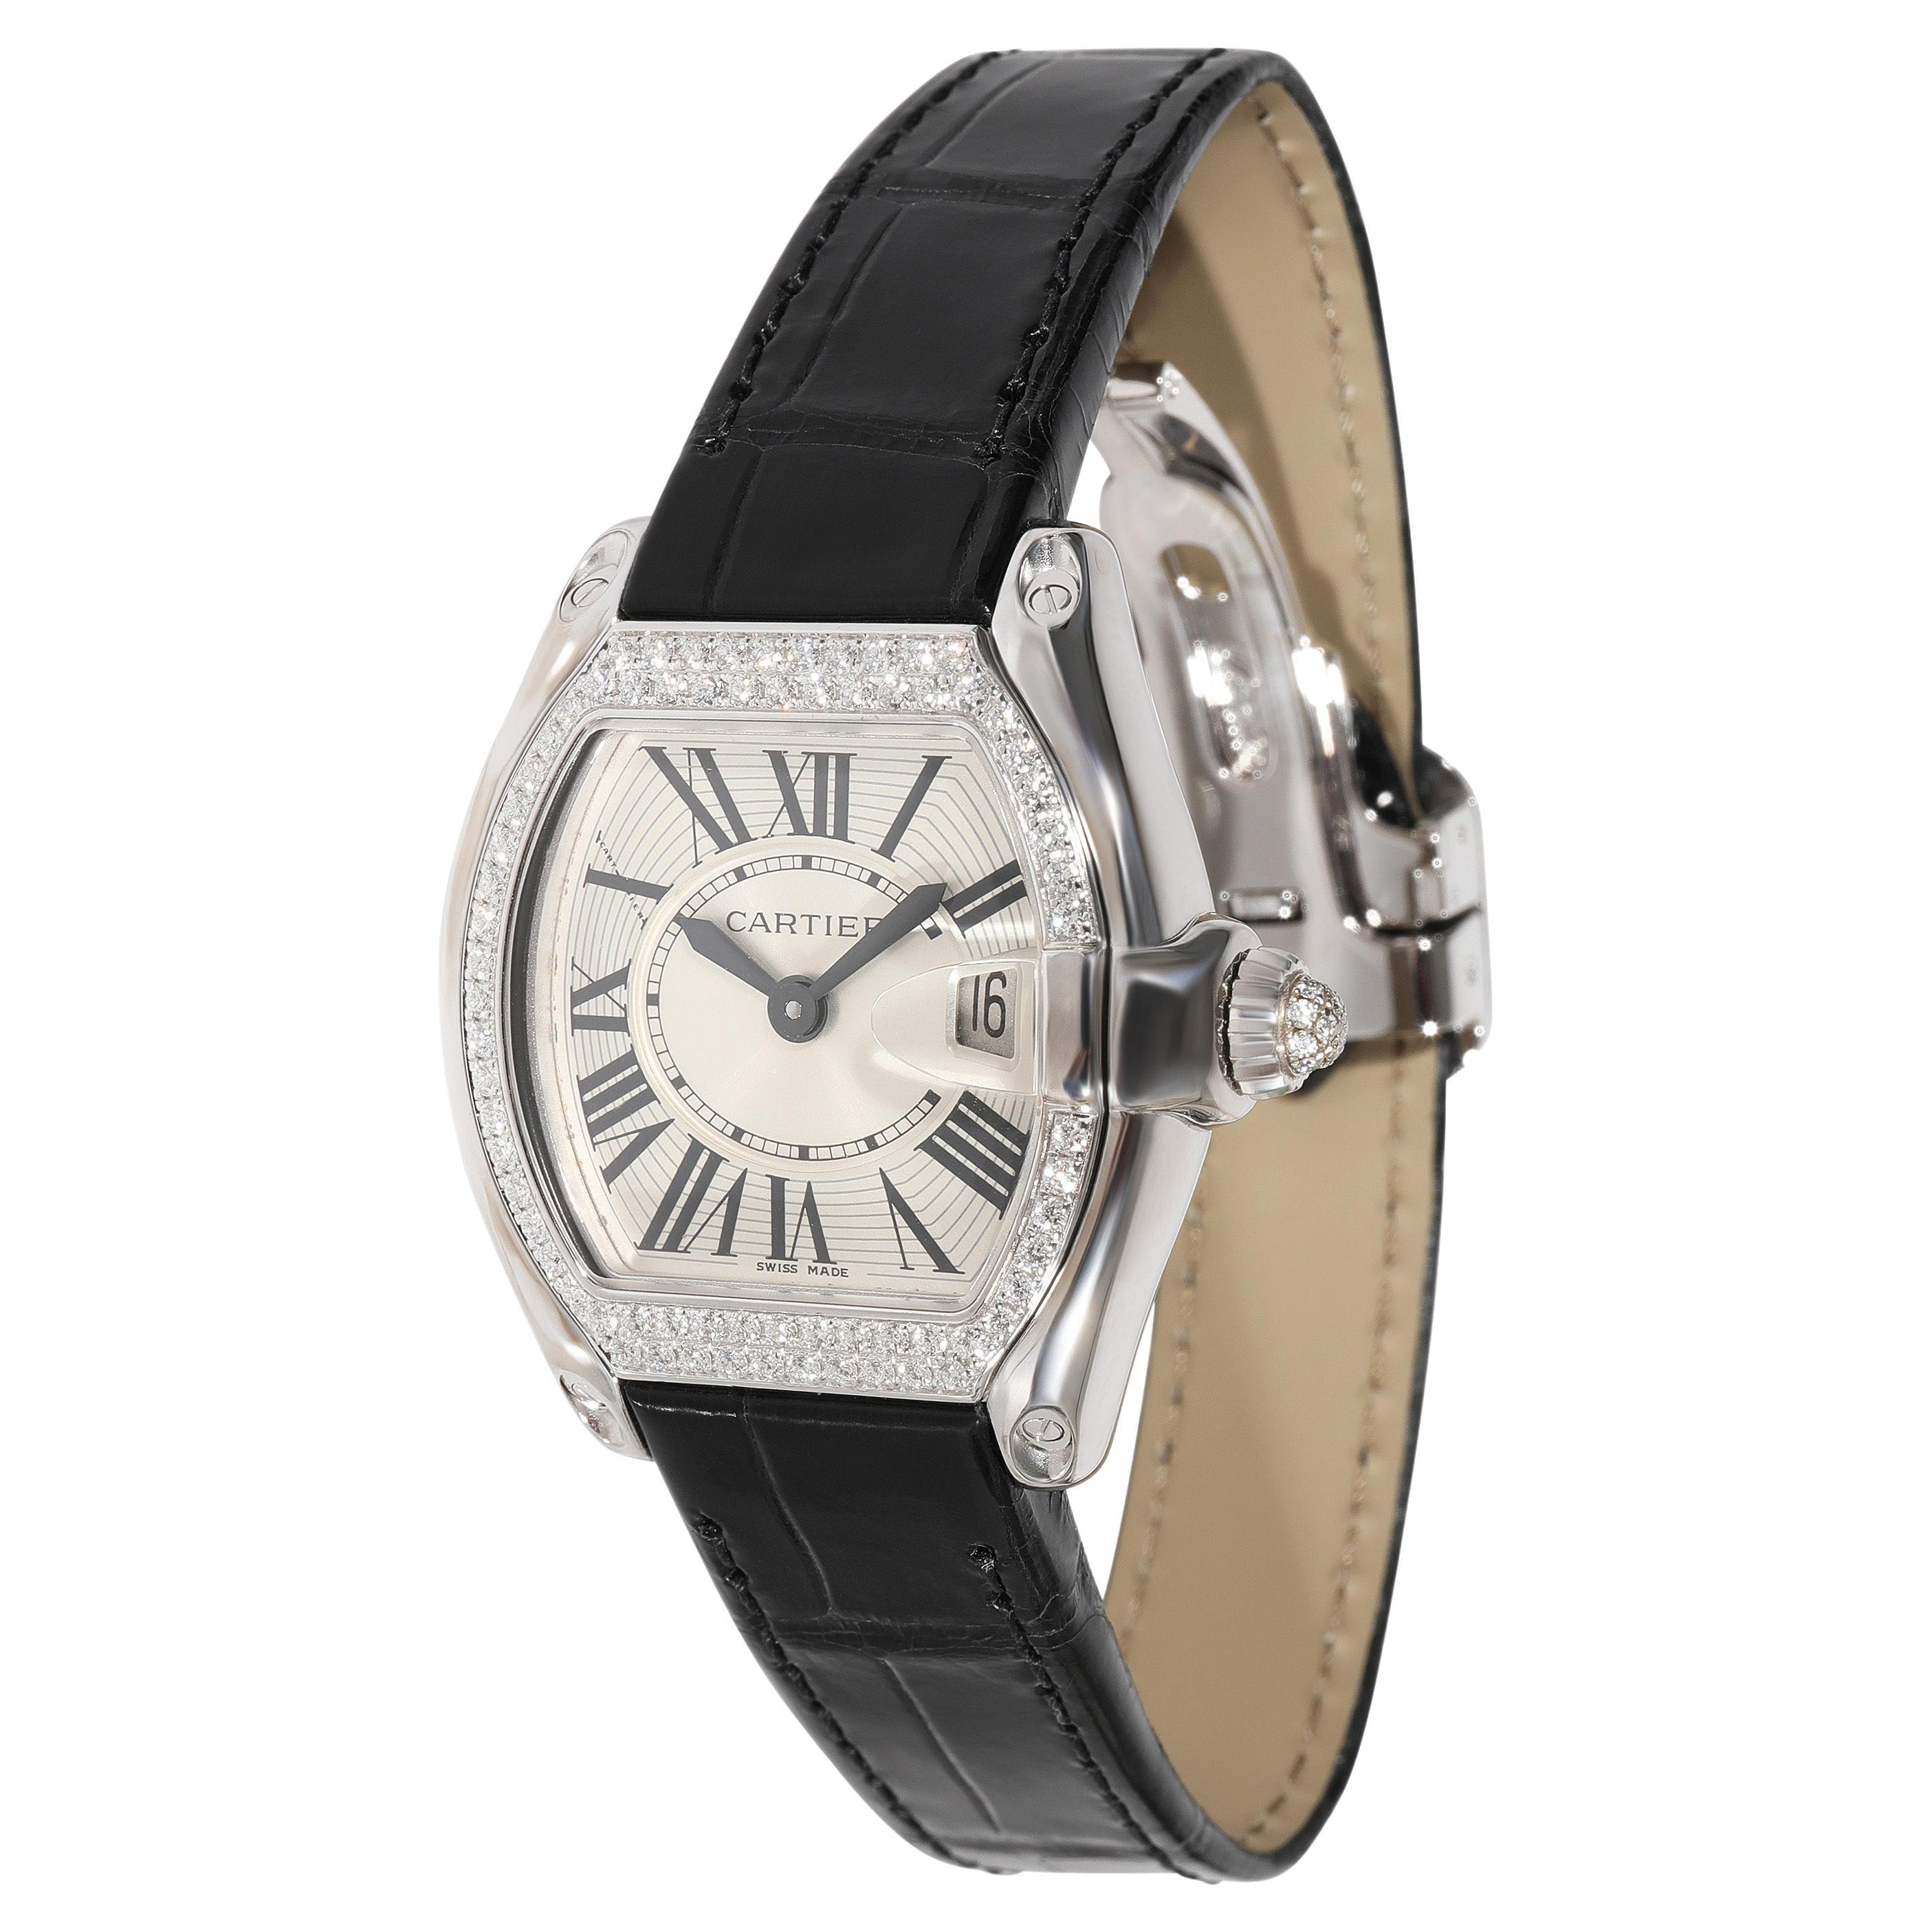 Cartier Roadster WE500260 Women's Watch in 18kt White Gold